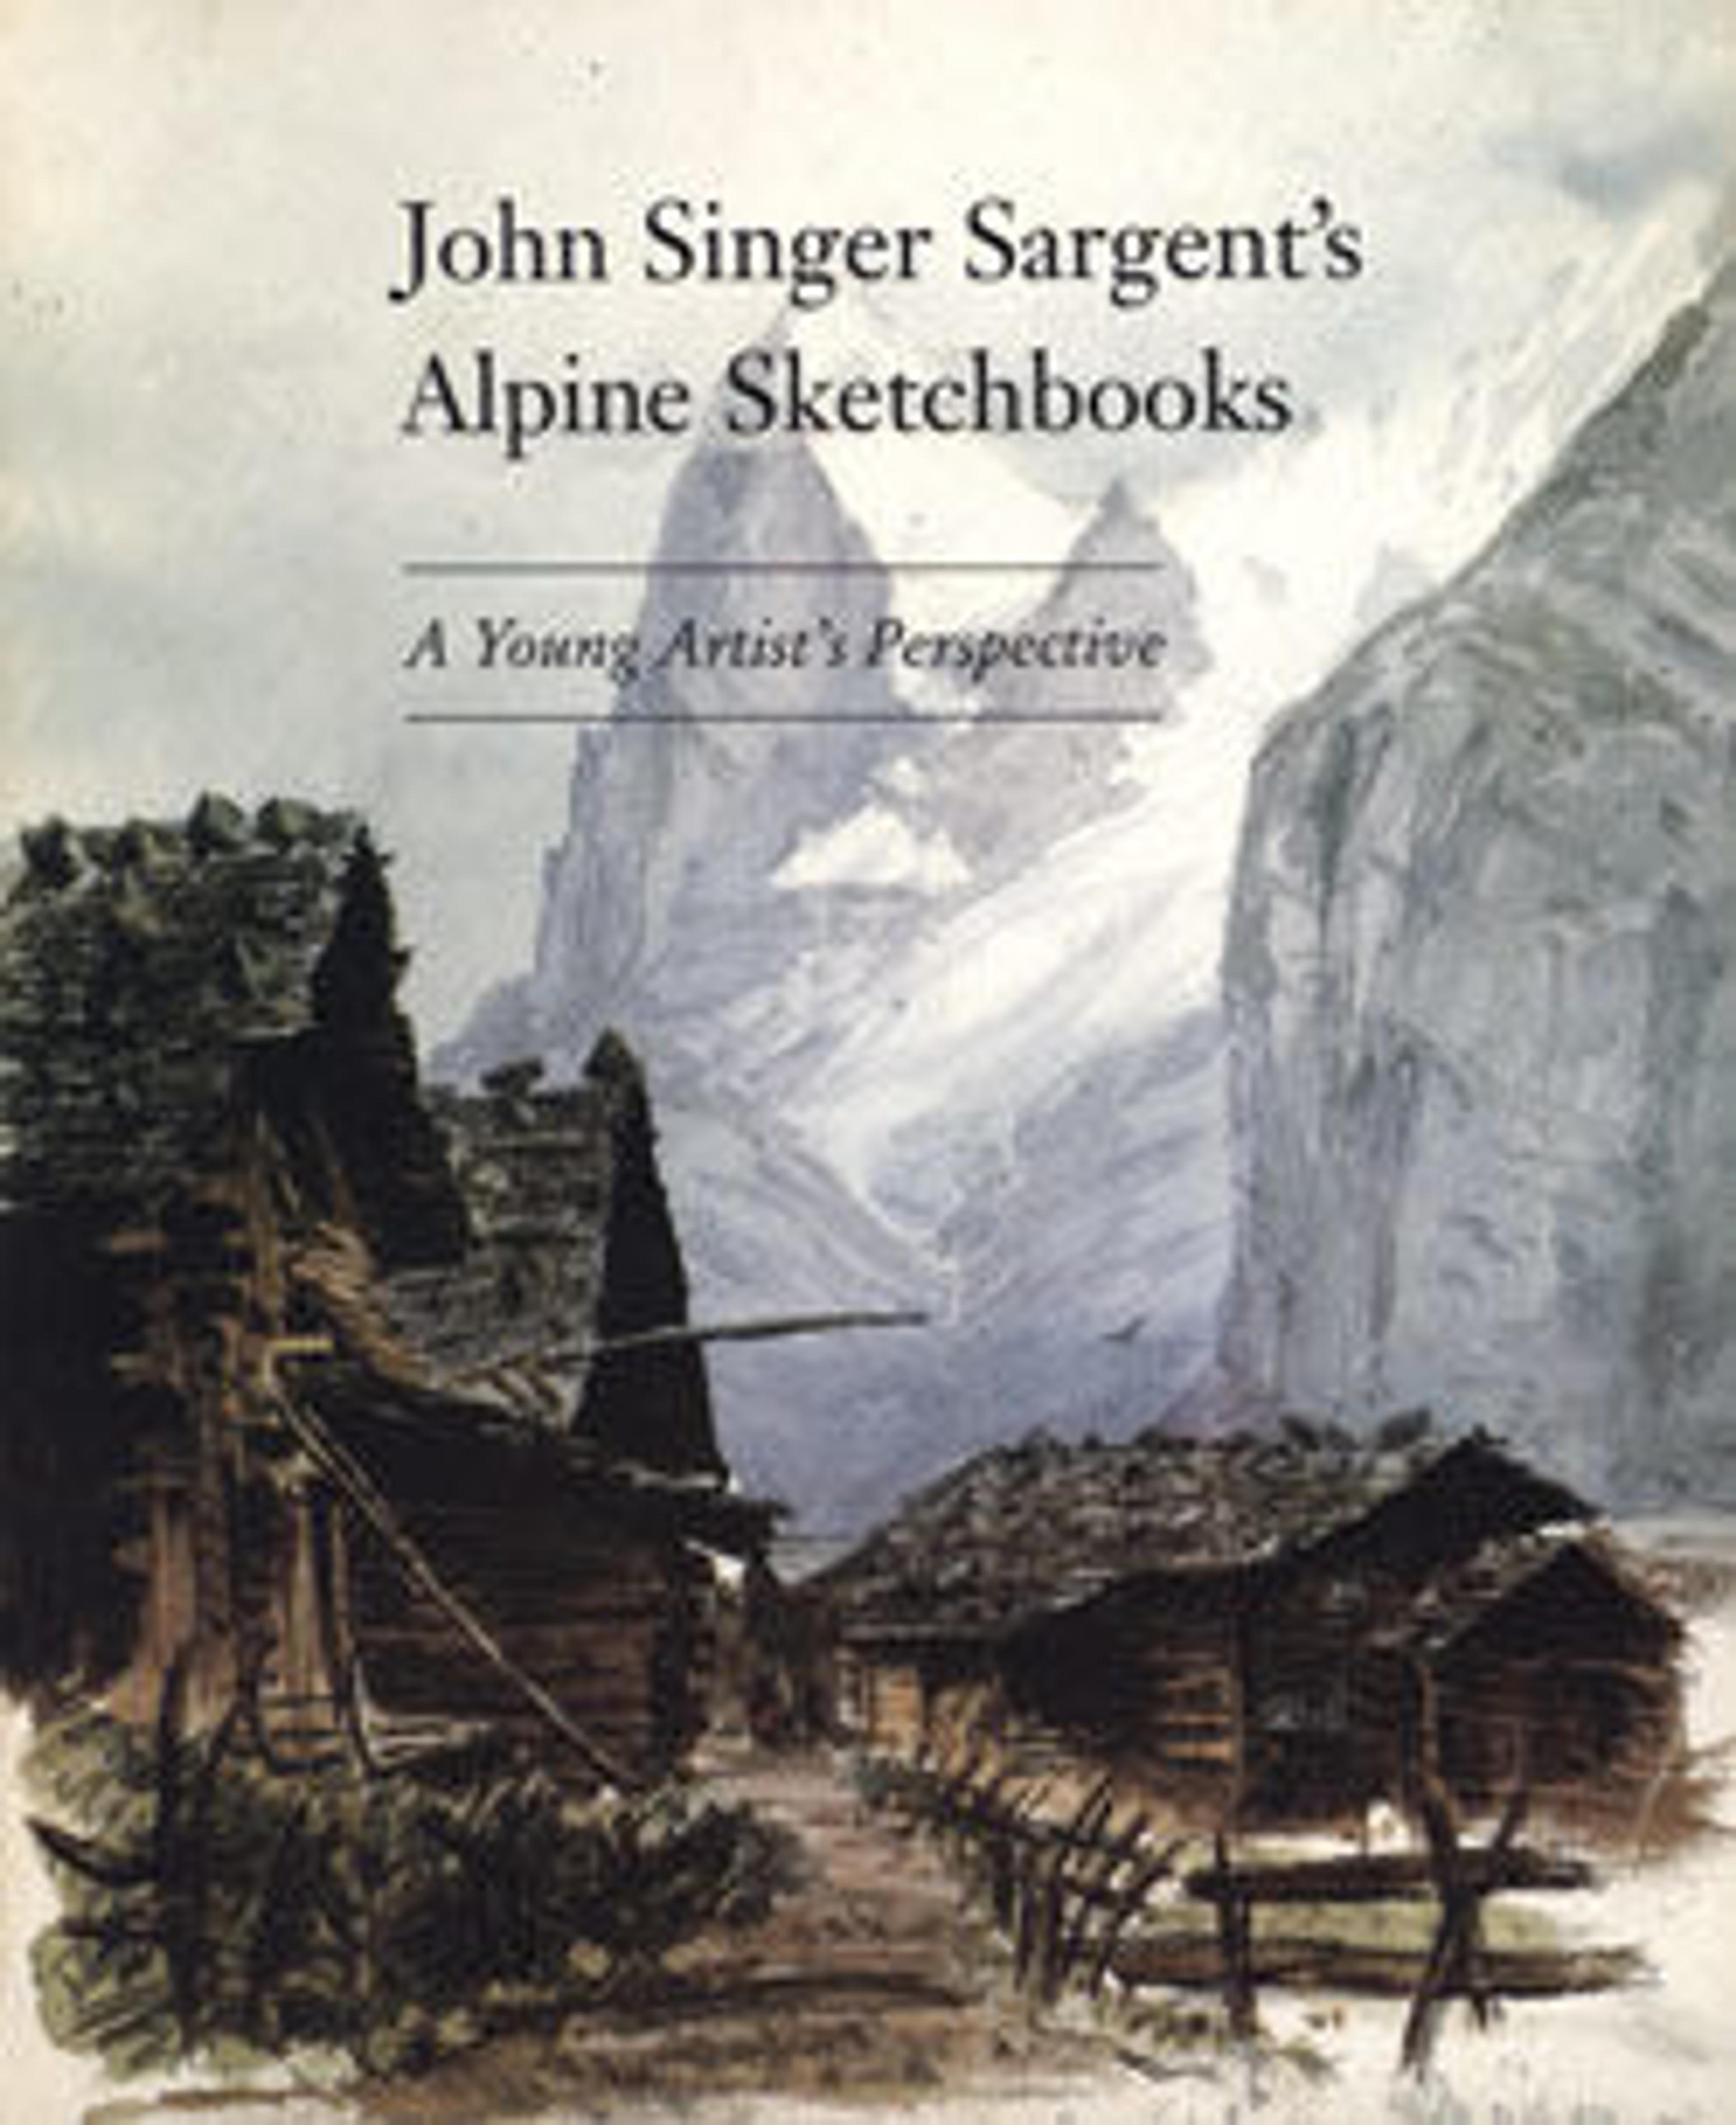 John Singer Sargent's Alpine Sketchbooks: A Young Artist's Perspective